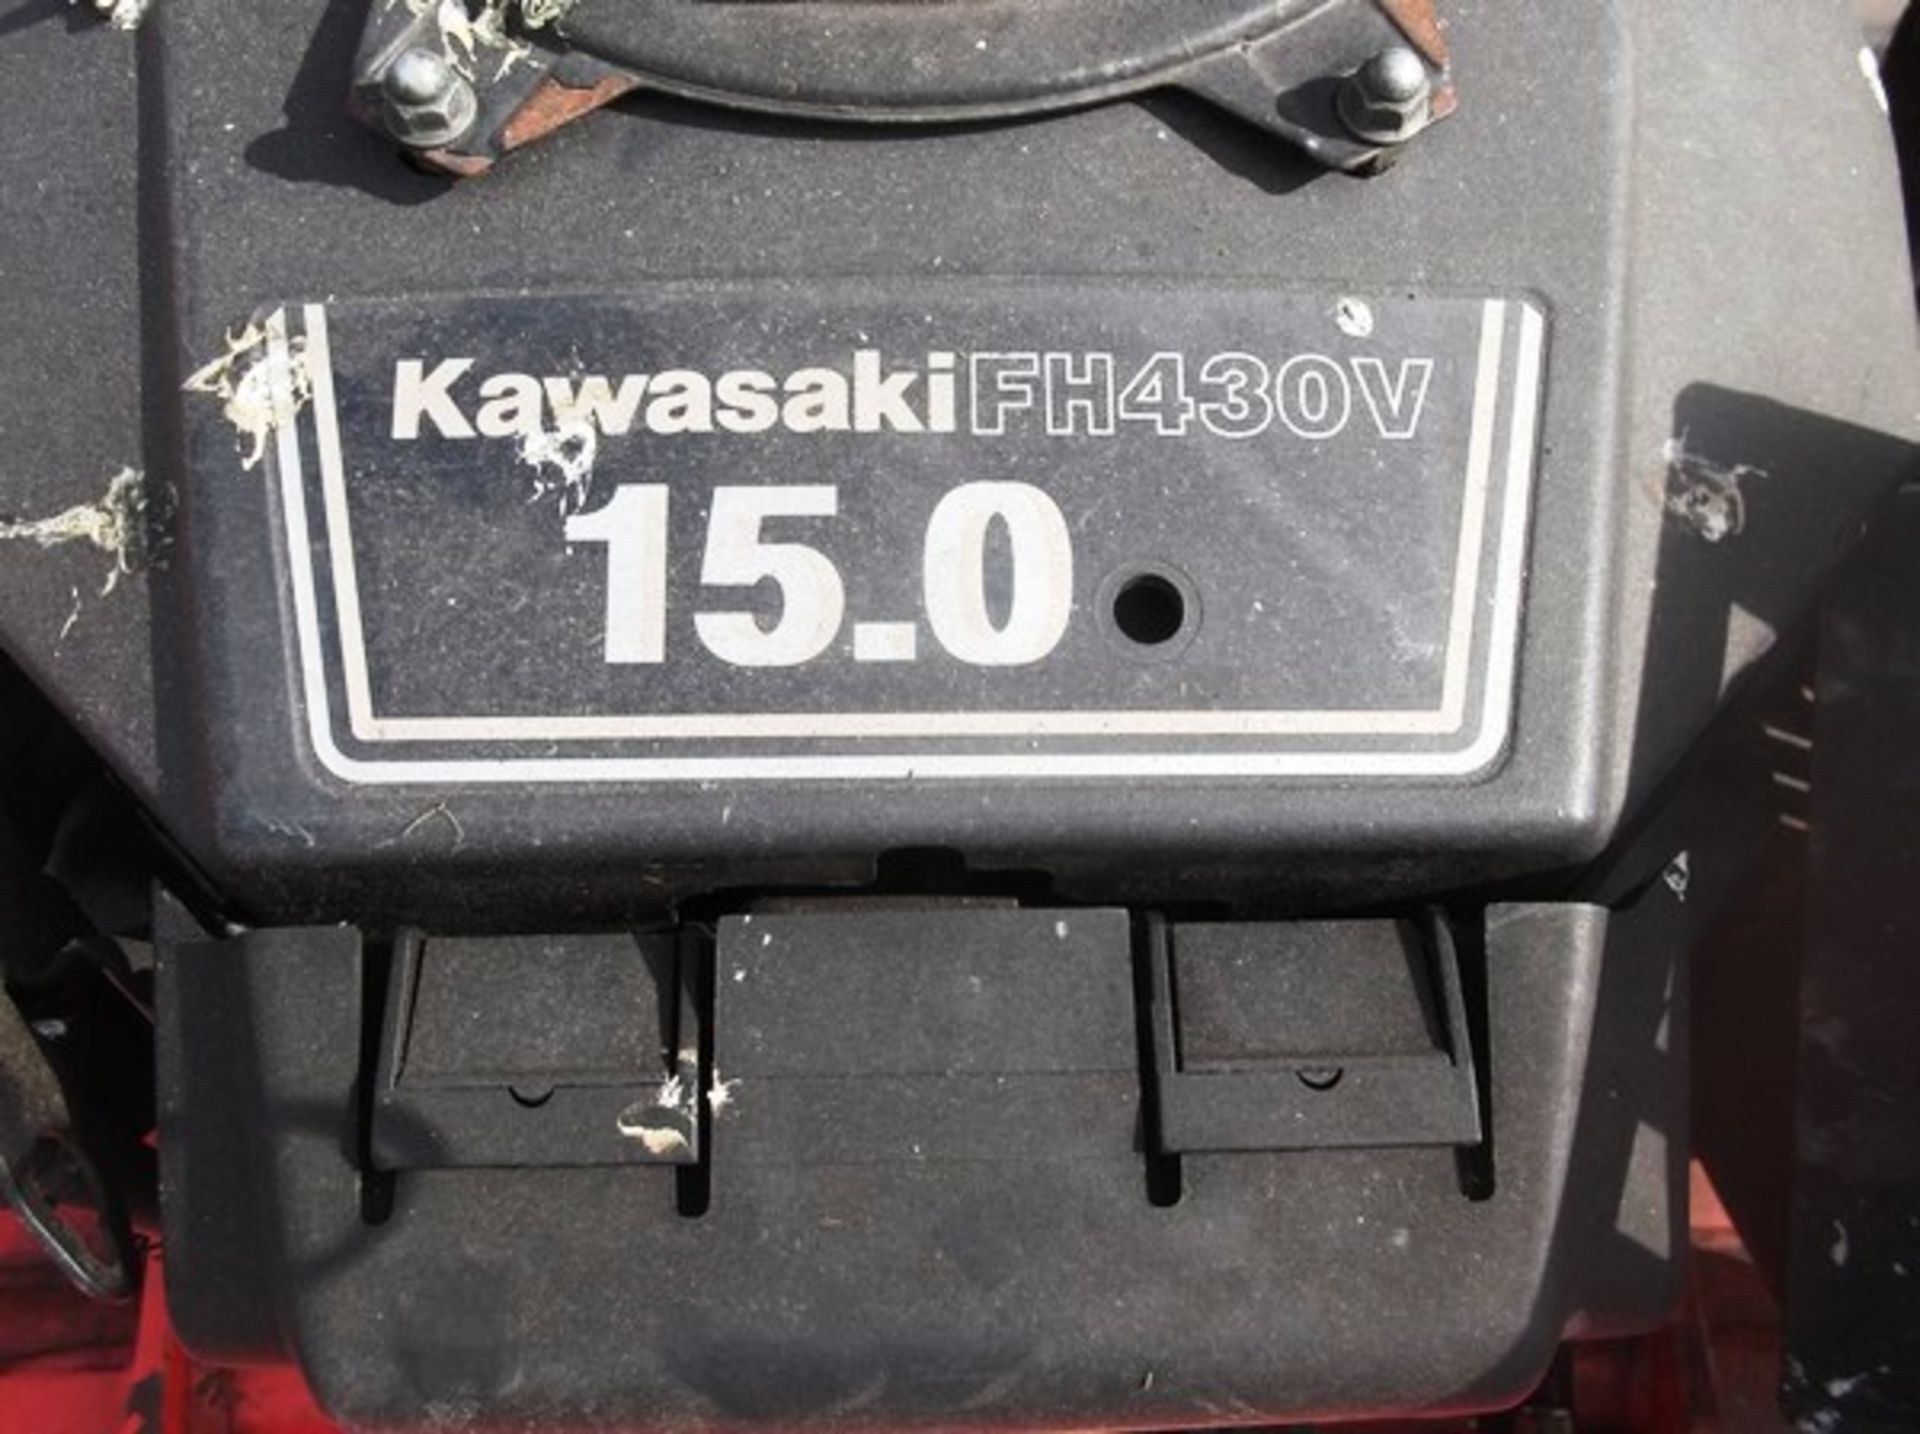 ARIENS 988319 MOWER C/W KAWASAKI FH430V ENGINE SN005509 FLEET NO 3515 - Image 3 of 4